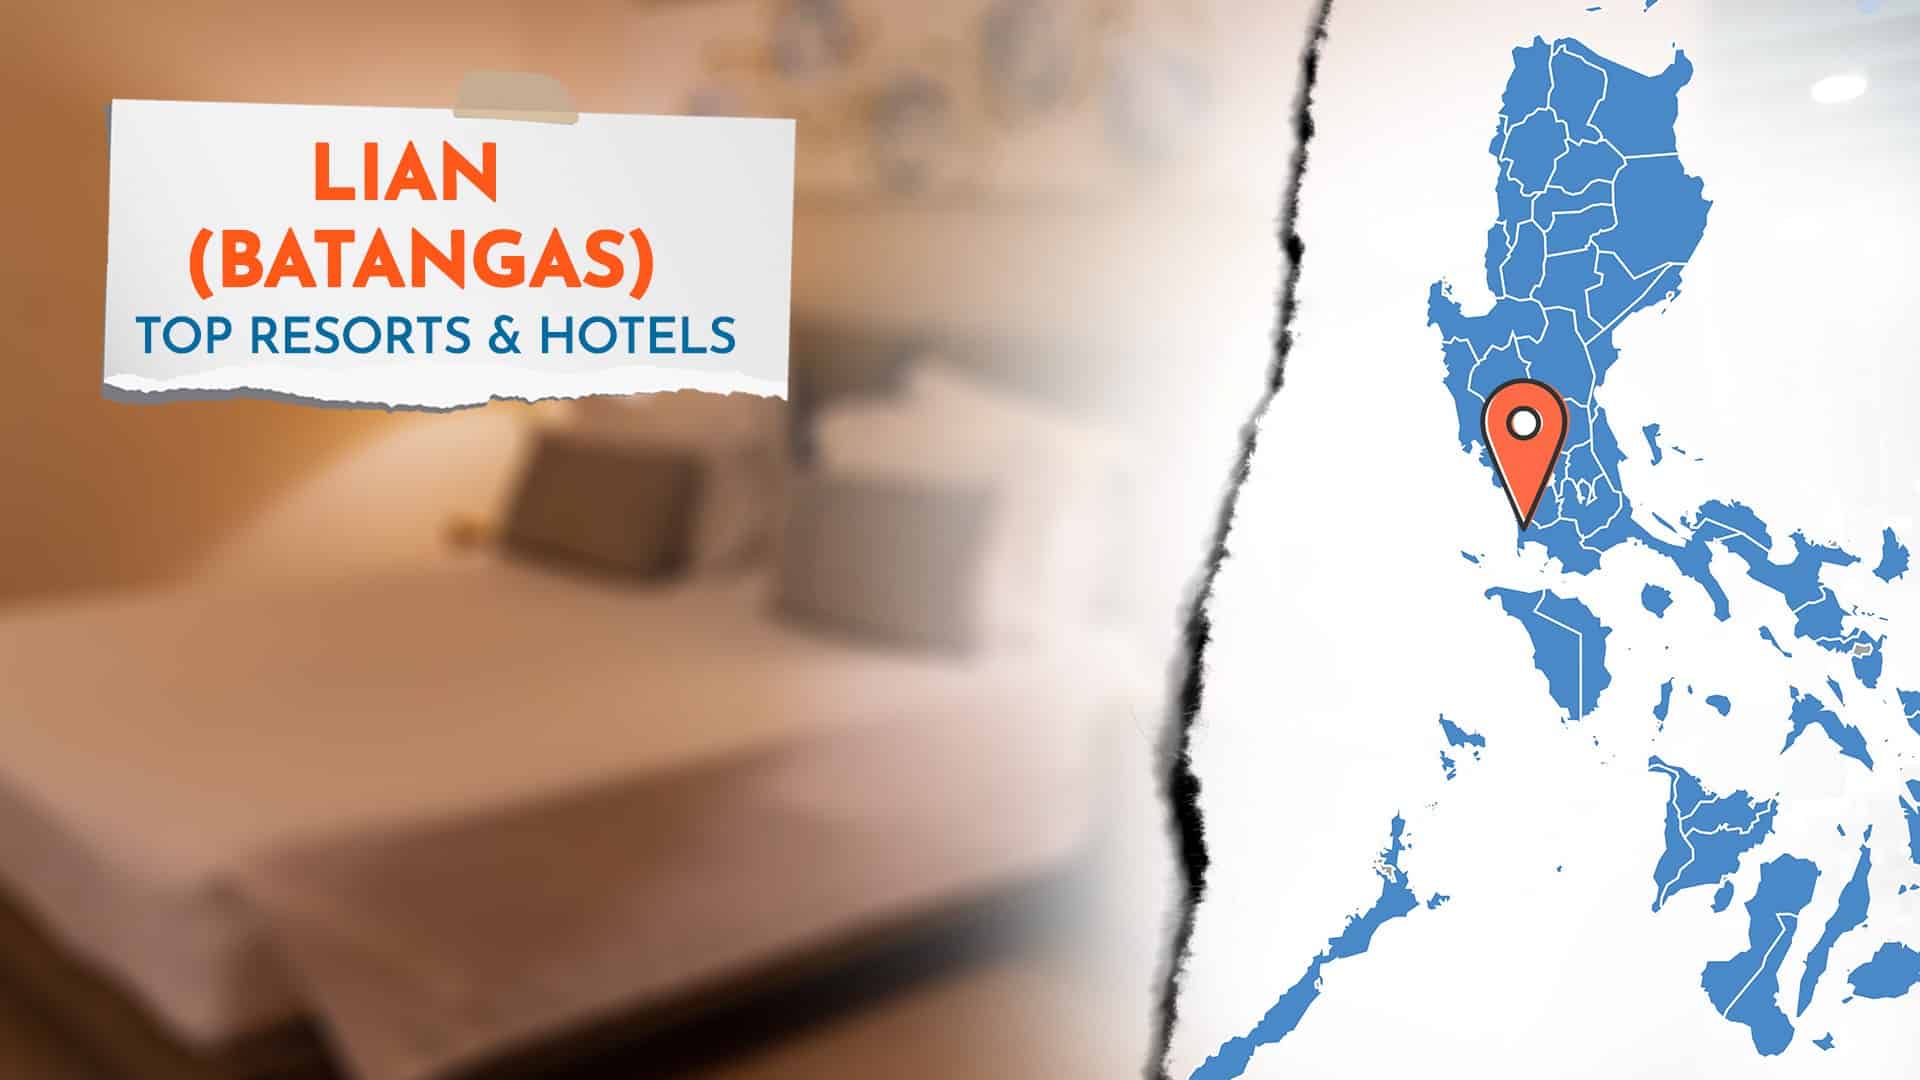 Lian Batangas- Top Resorts & Hotels